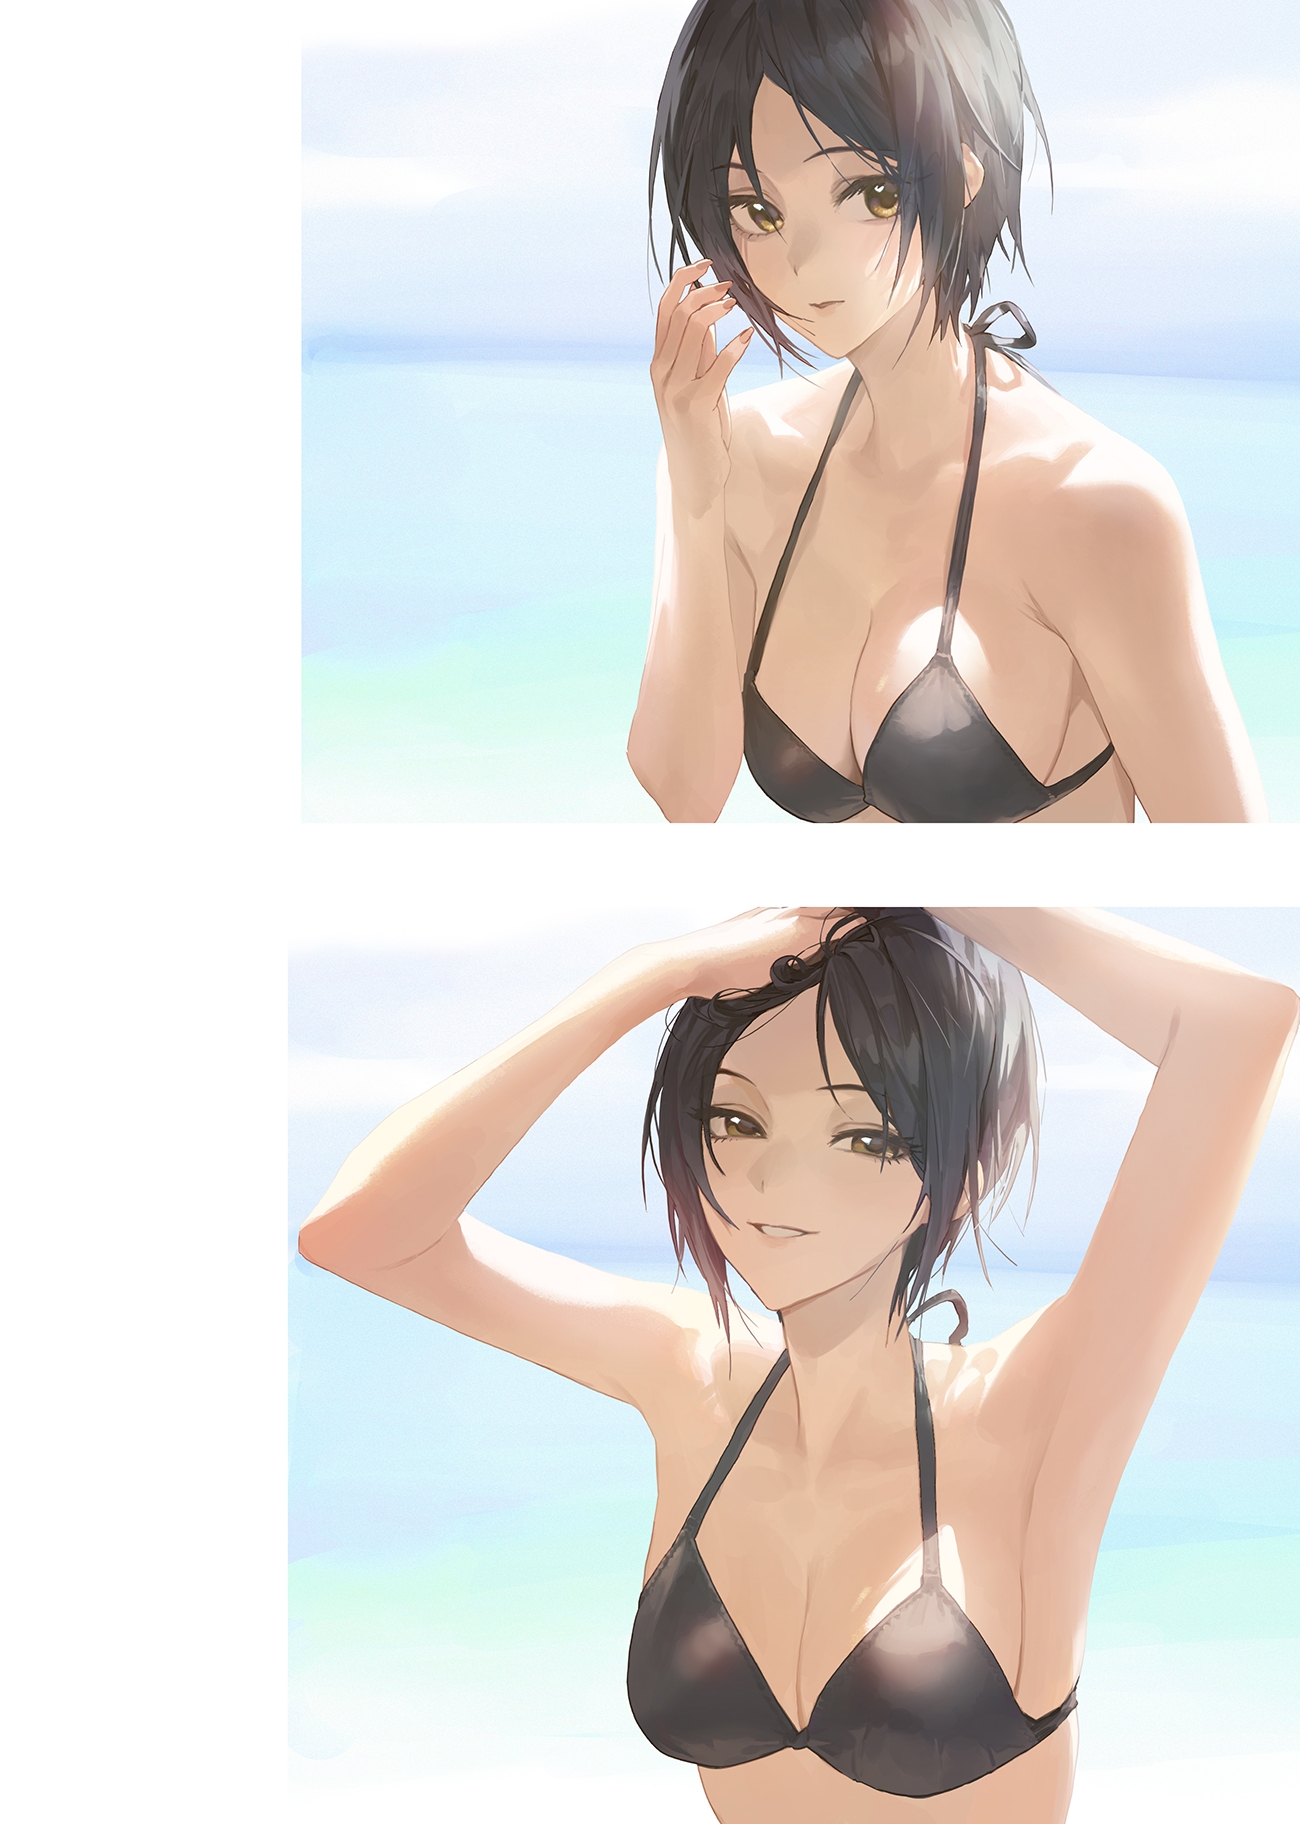 Anime 1300x1824 anime anime girls digital art artwork 2D portrait display collage bikini cleavage dark hair short hair Hayami Kanade THE iDOLM@STER Mossi (artist)